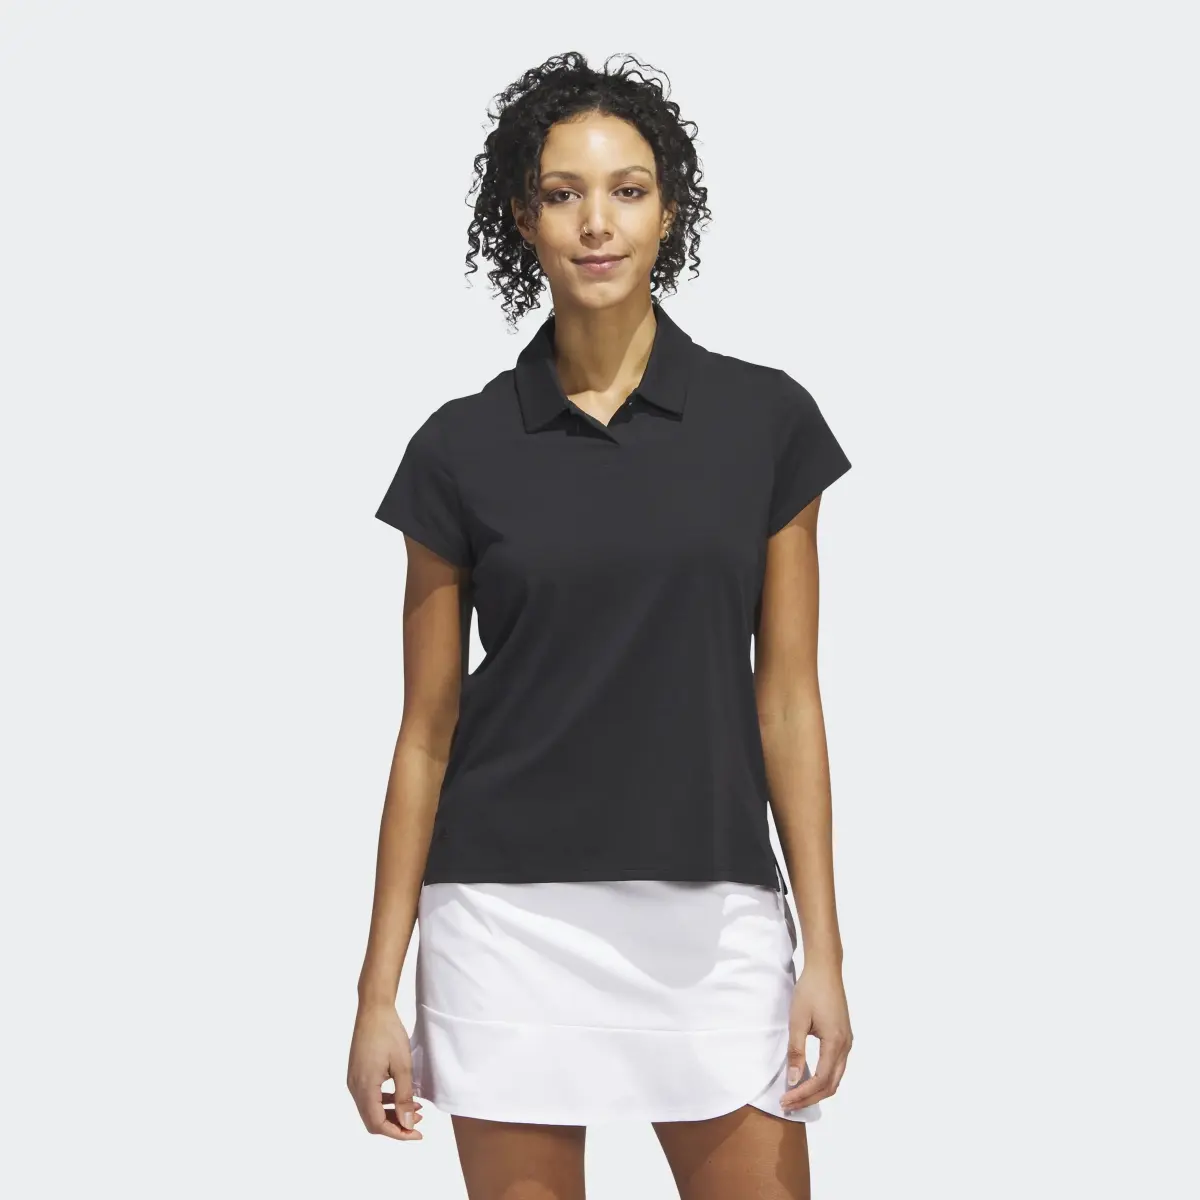 Adidas Go-To Heathered Golf Polo Shirt. 2